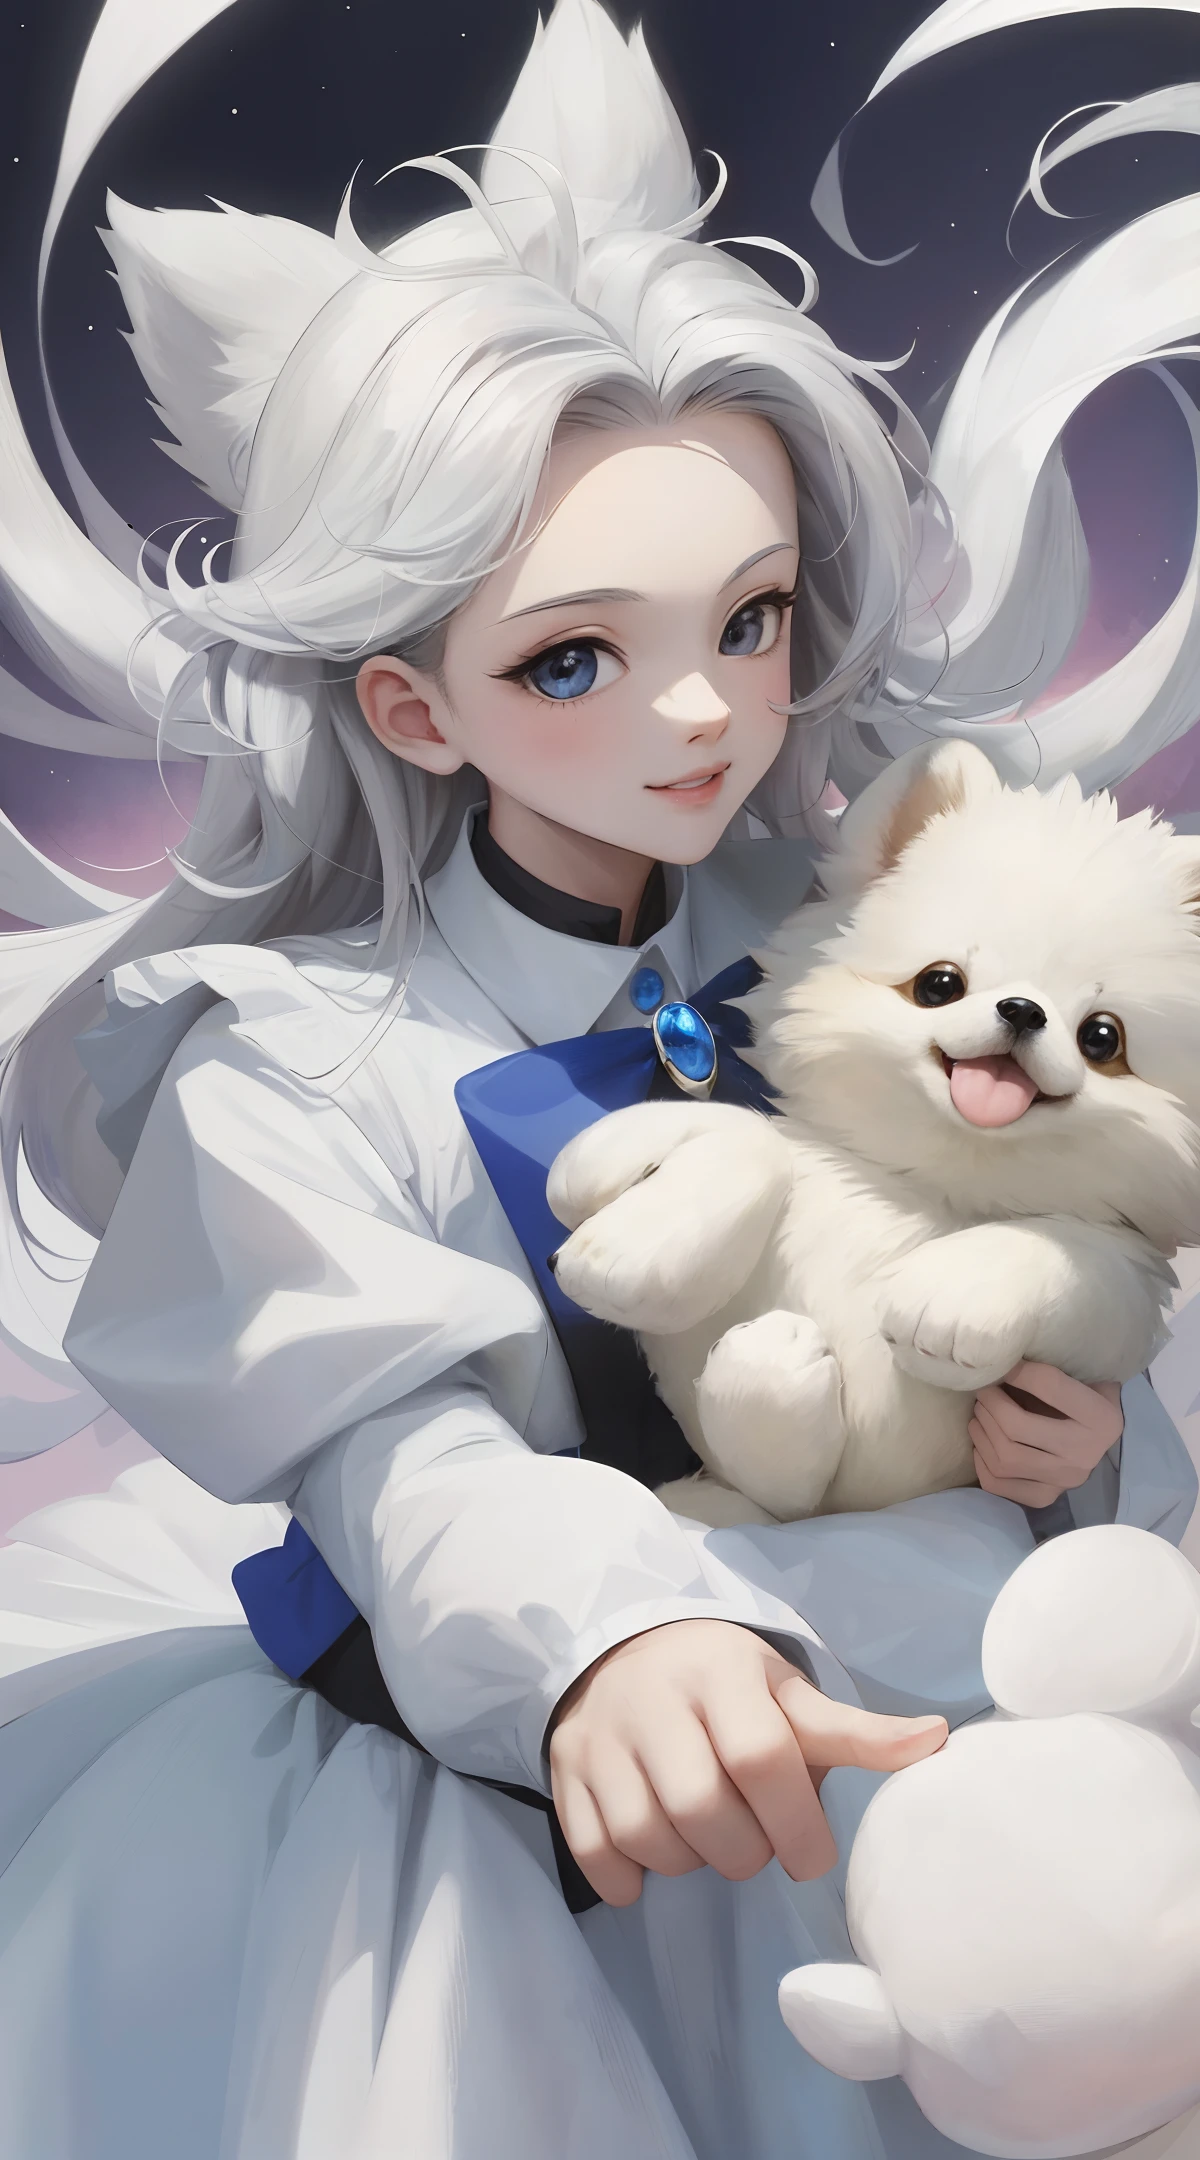 (Cartoon style, masterpiece, cute face, genius imagination, white plush, dense plush, magic elements, with cute and irresistible Pomeranian, warm background) Pomeranian